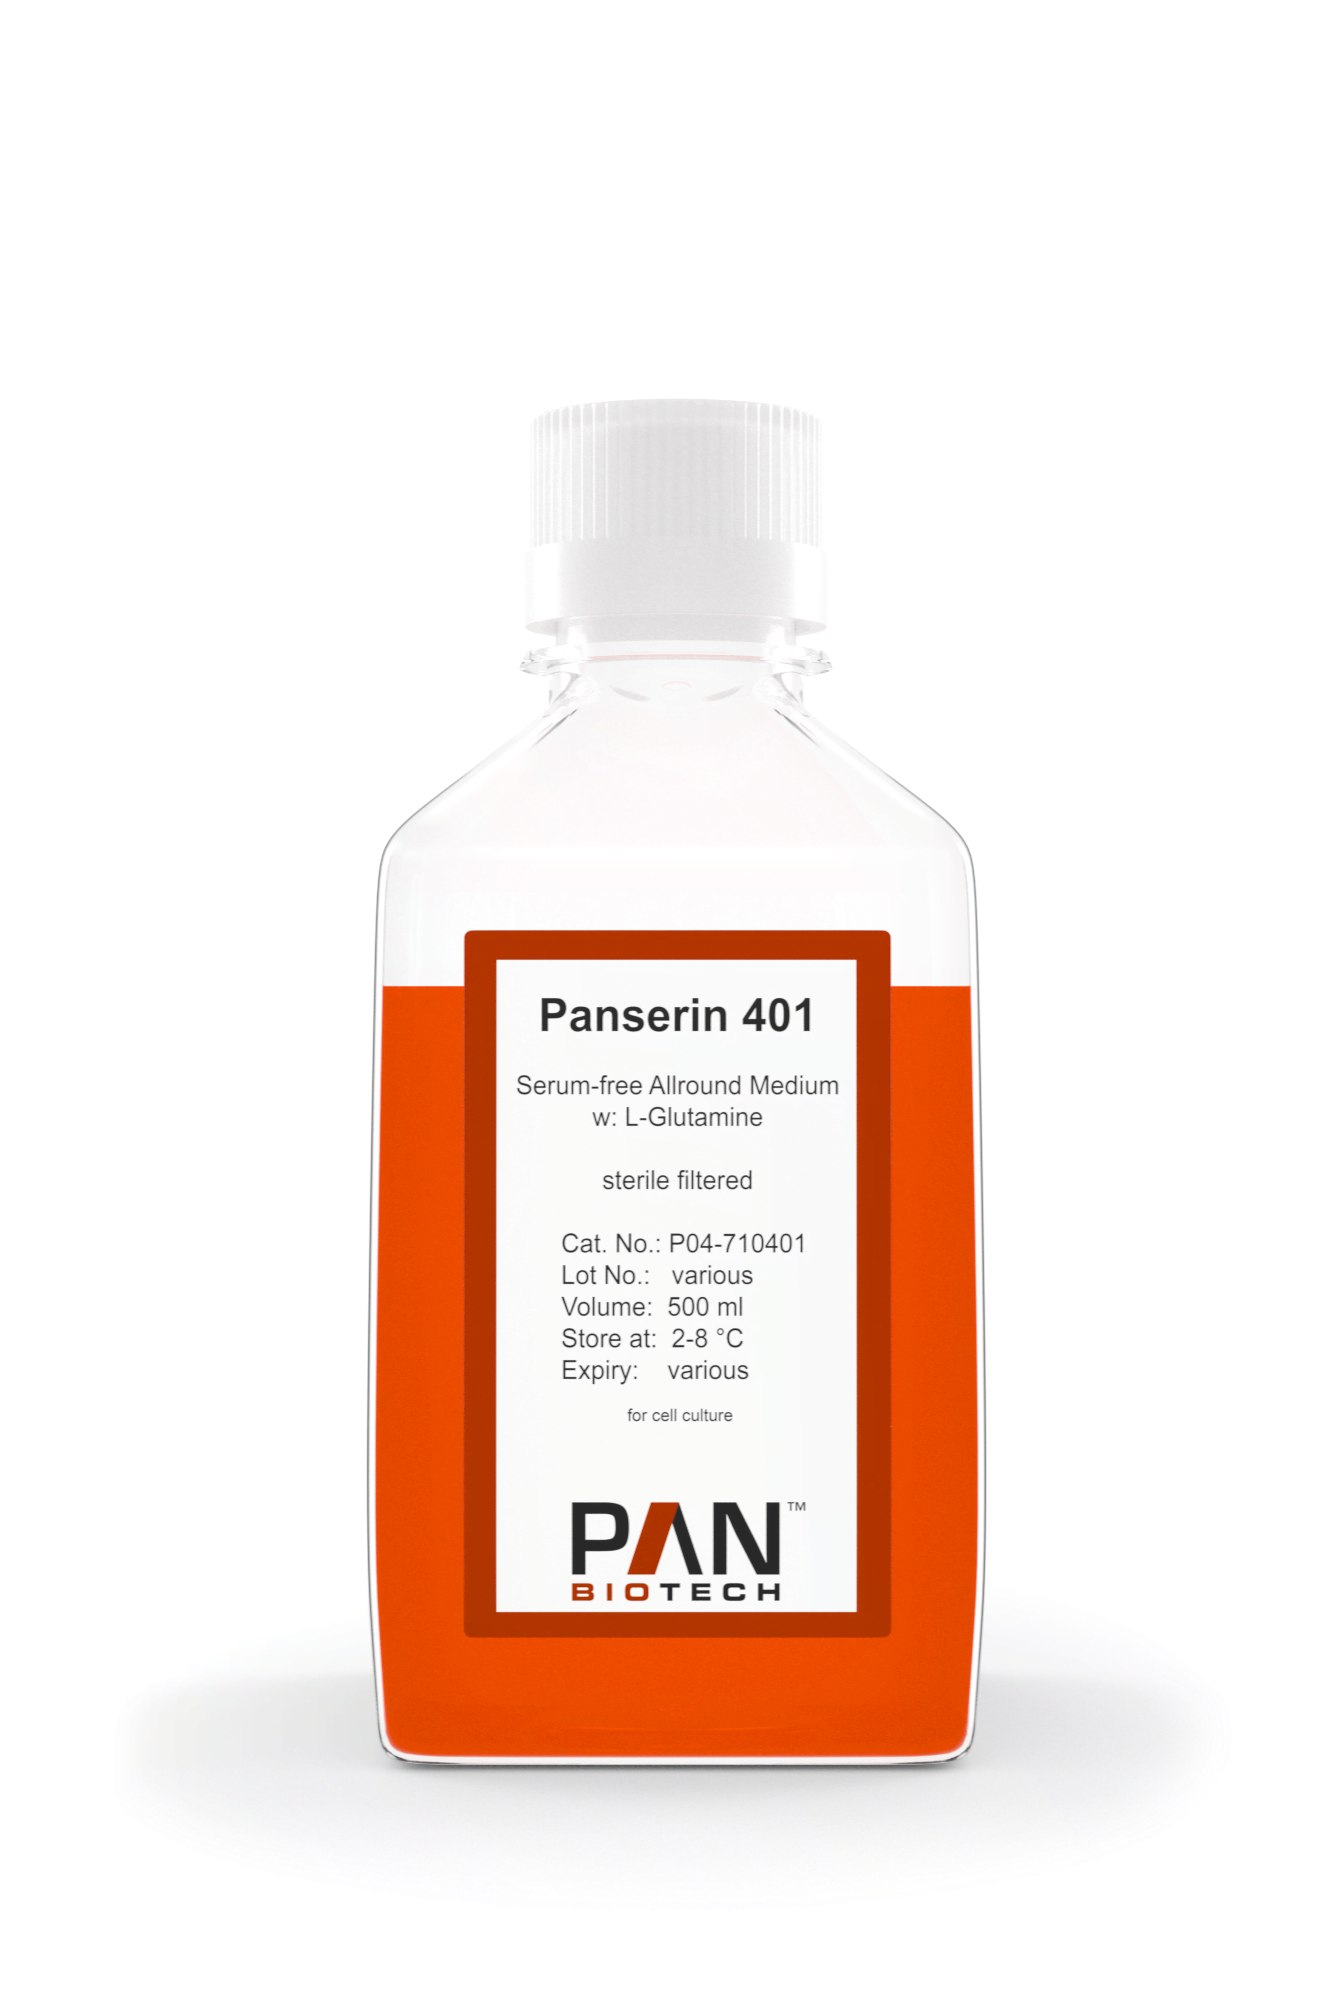 Panserin 401 Serum-free Allround Medium